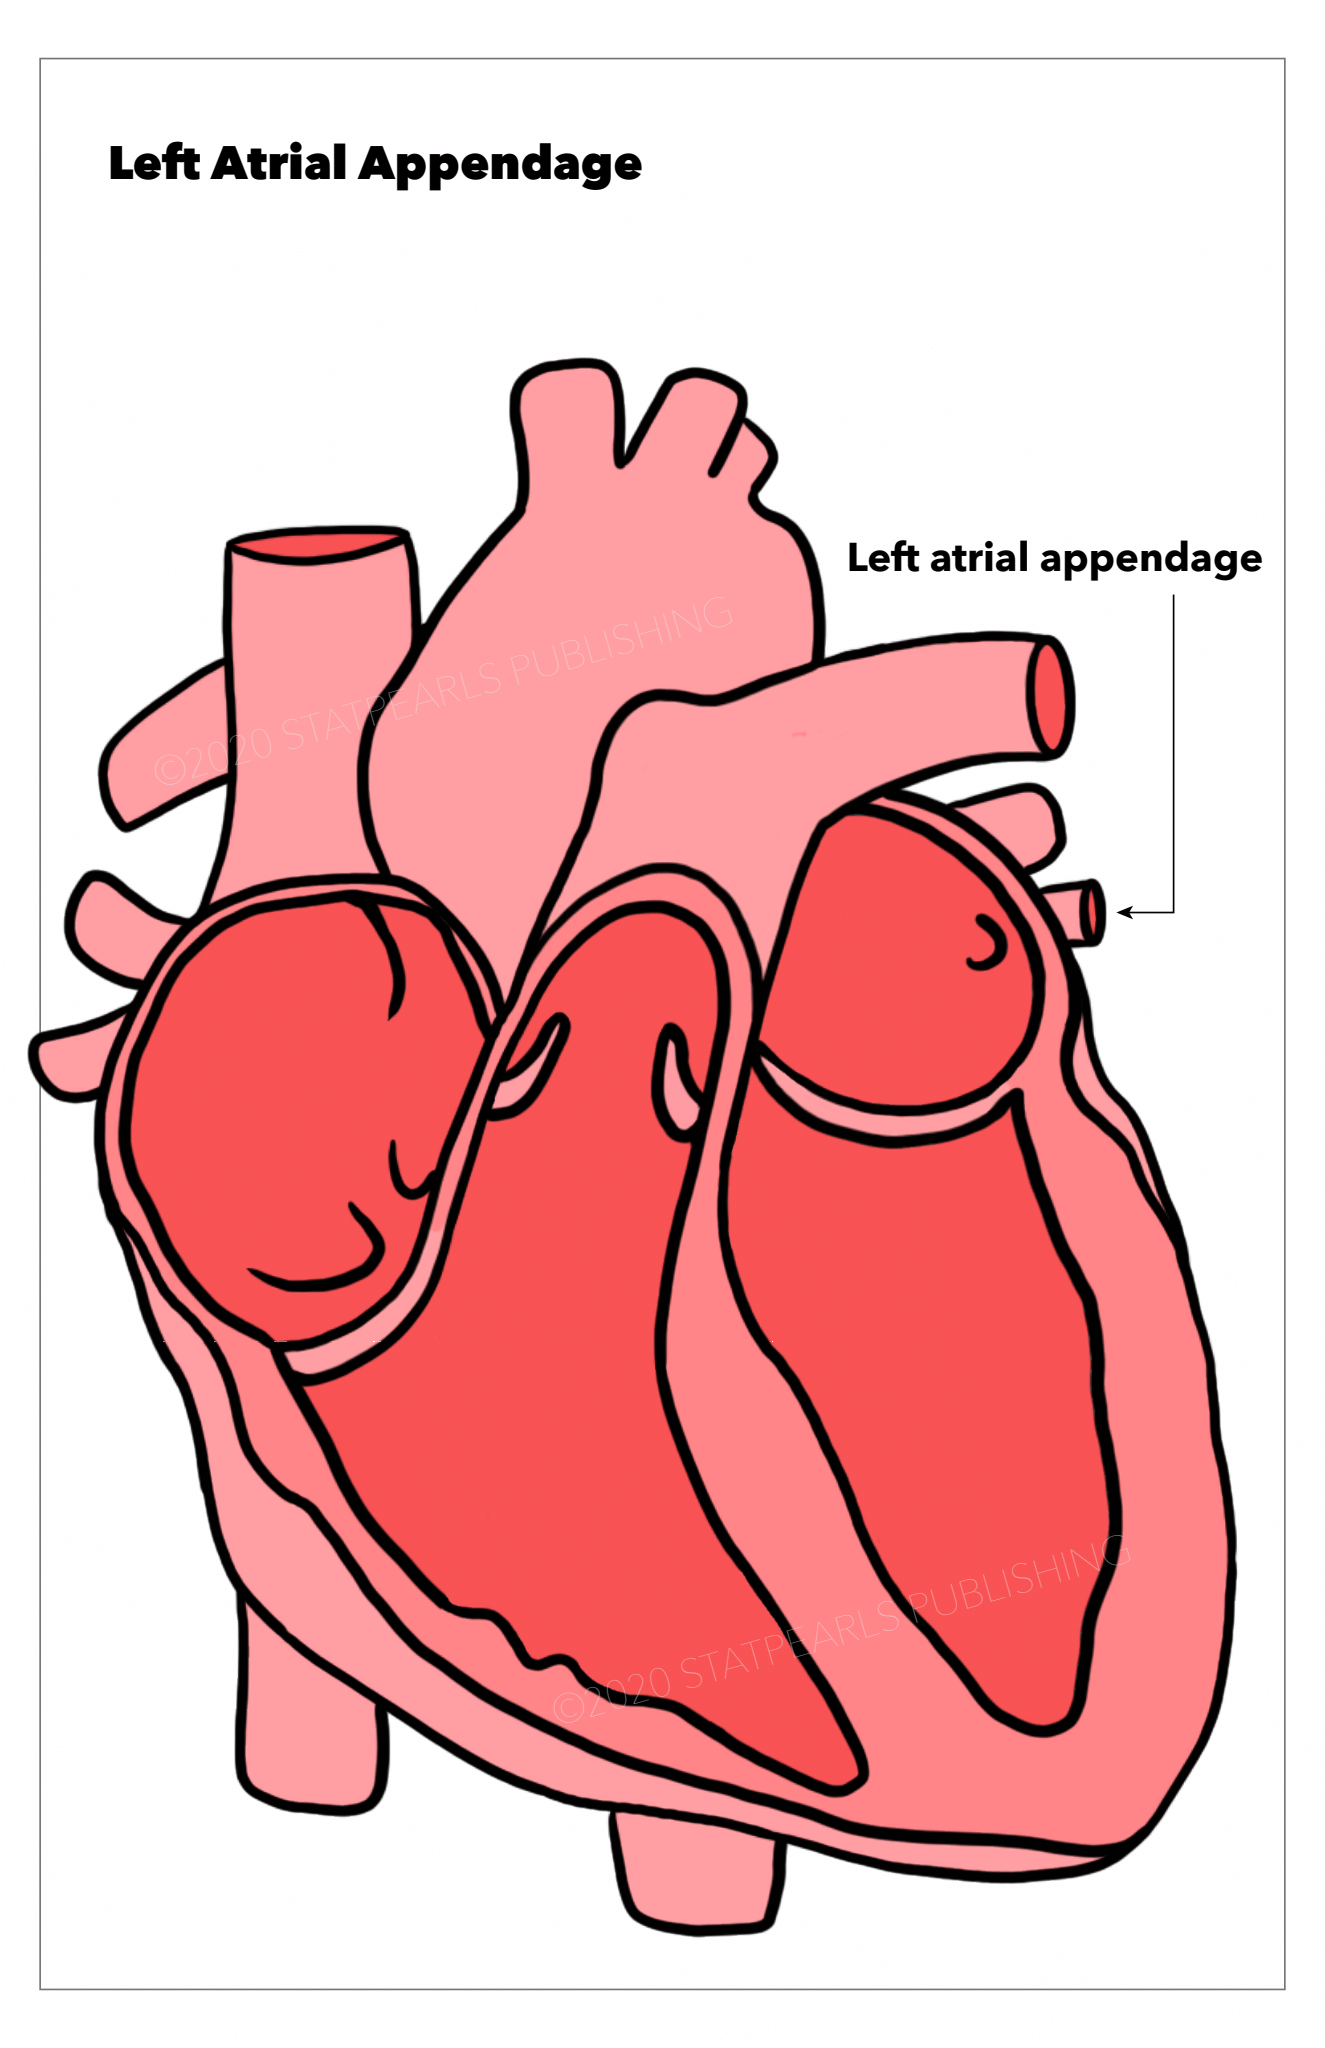 Left atrial appendage, heart